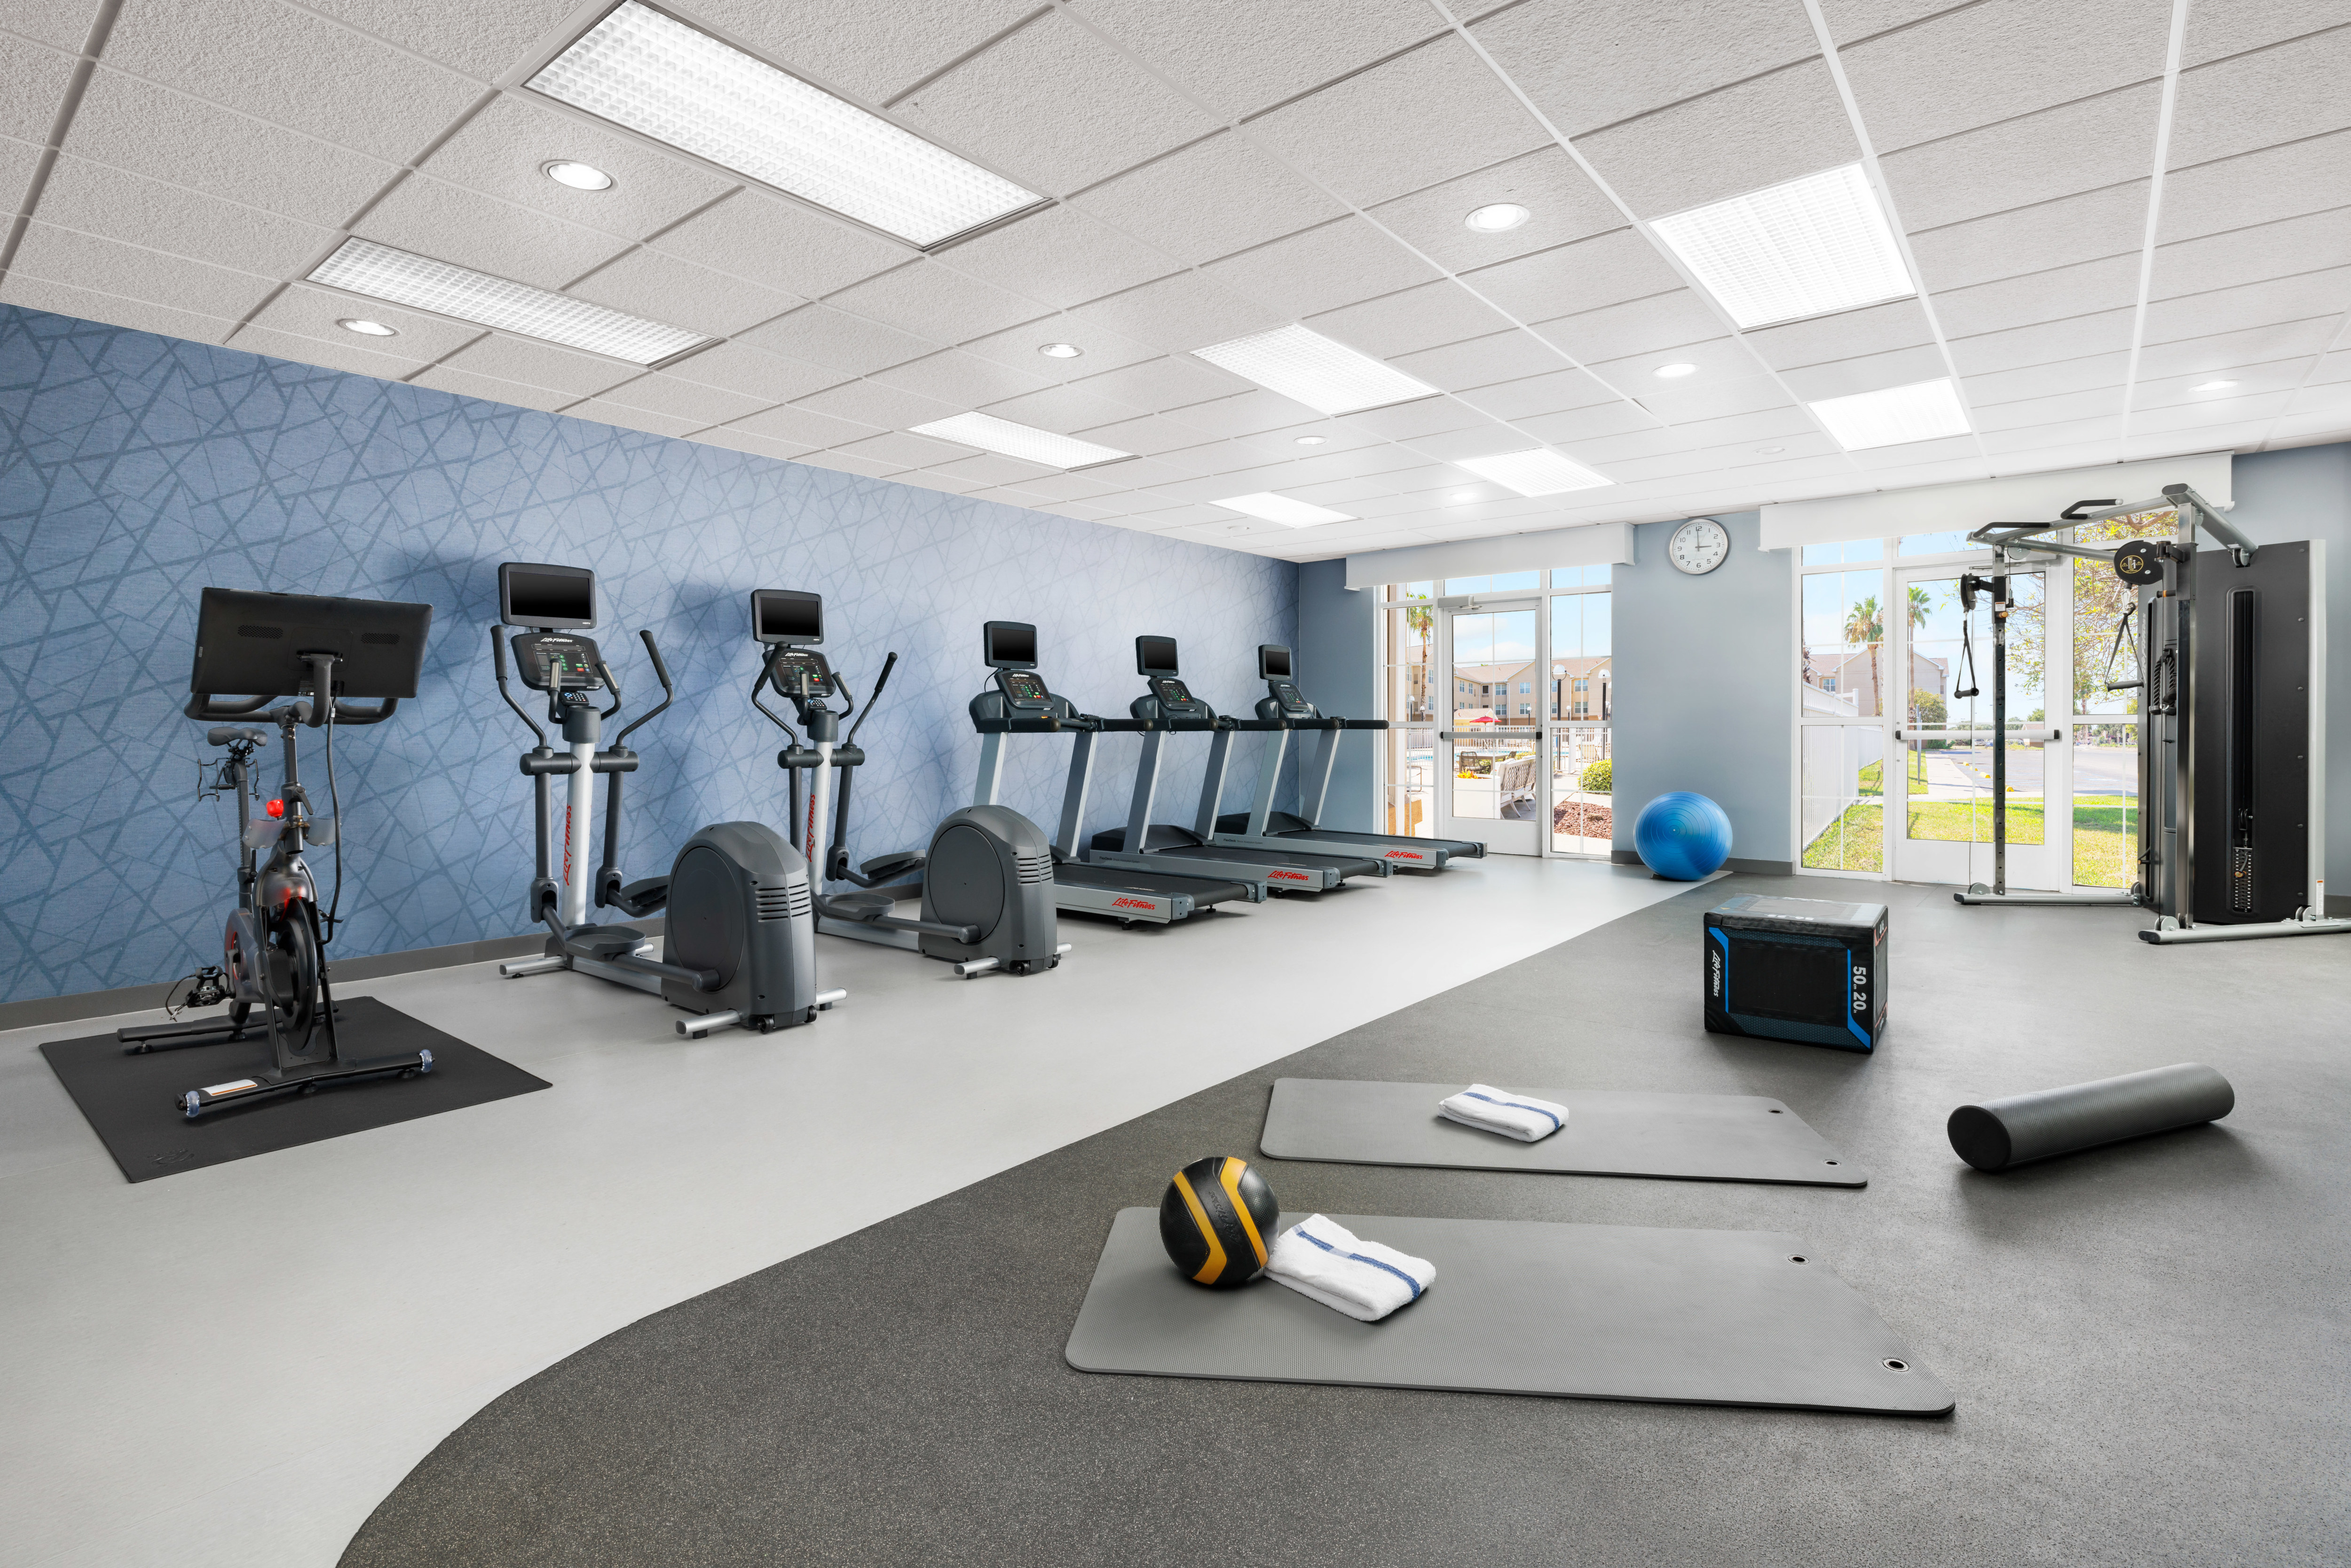 on site fitness center, Peloton bike, ellipticals, treadmills, yoga mats